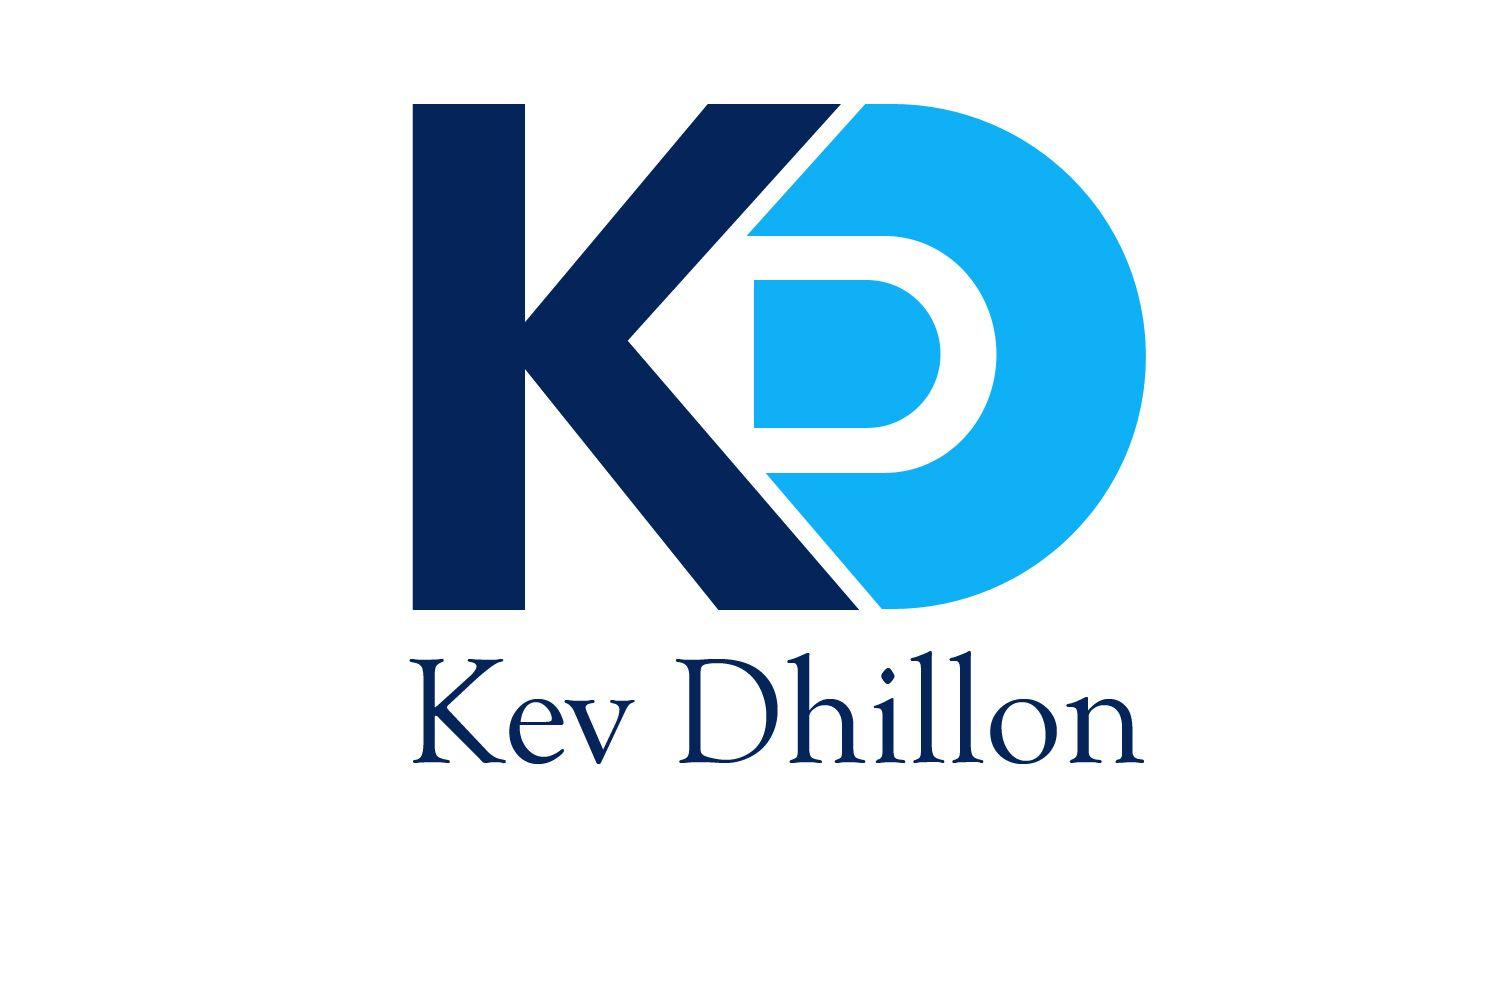 KD Logo - KD logo | Graphic Design | Logos, Logo design, Custom logo design